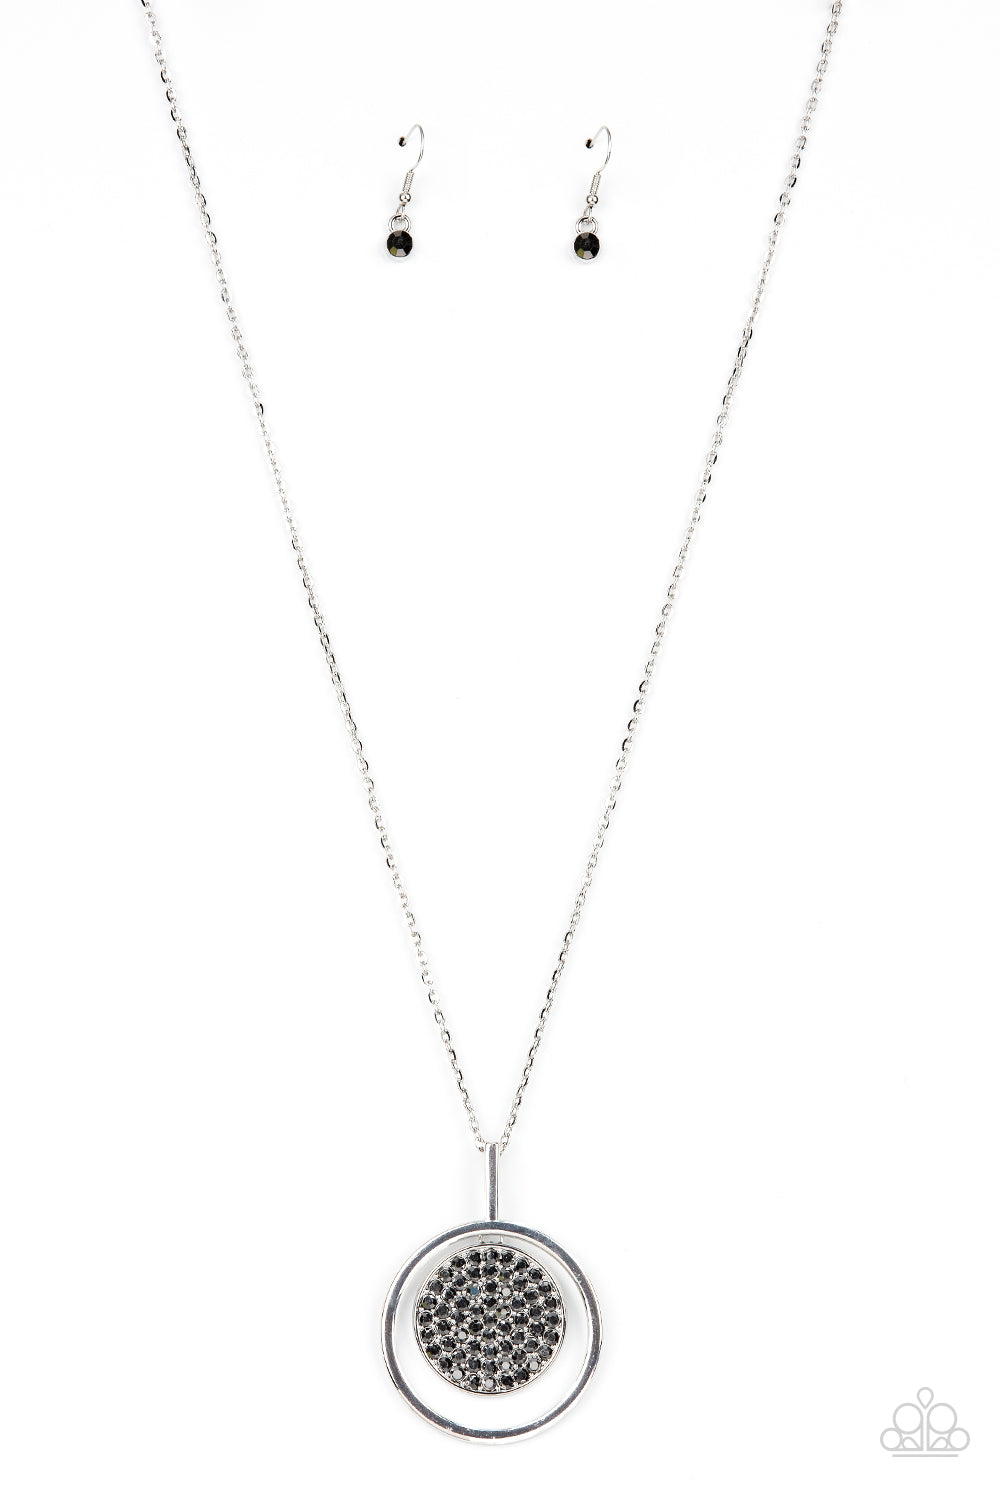 There She GLOWS! - Silver Smoky Hematite Rhinestone Pendant Paparazzi Necklace & matching earrings